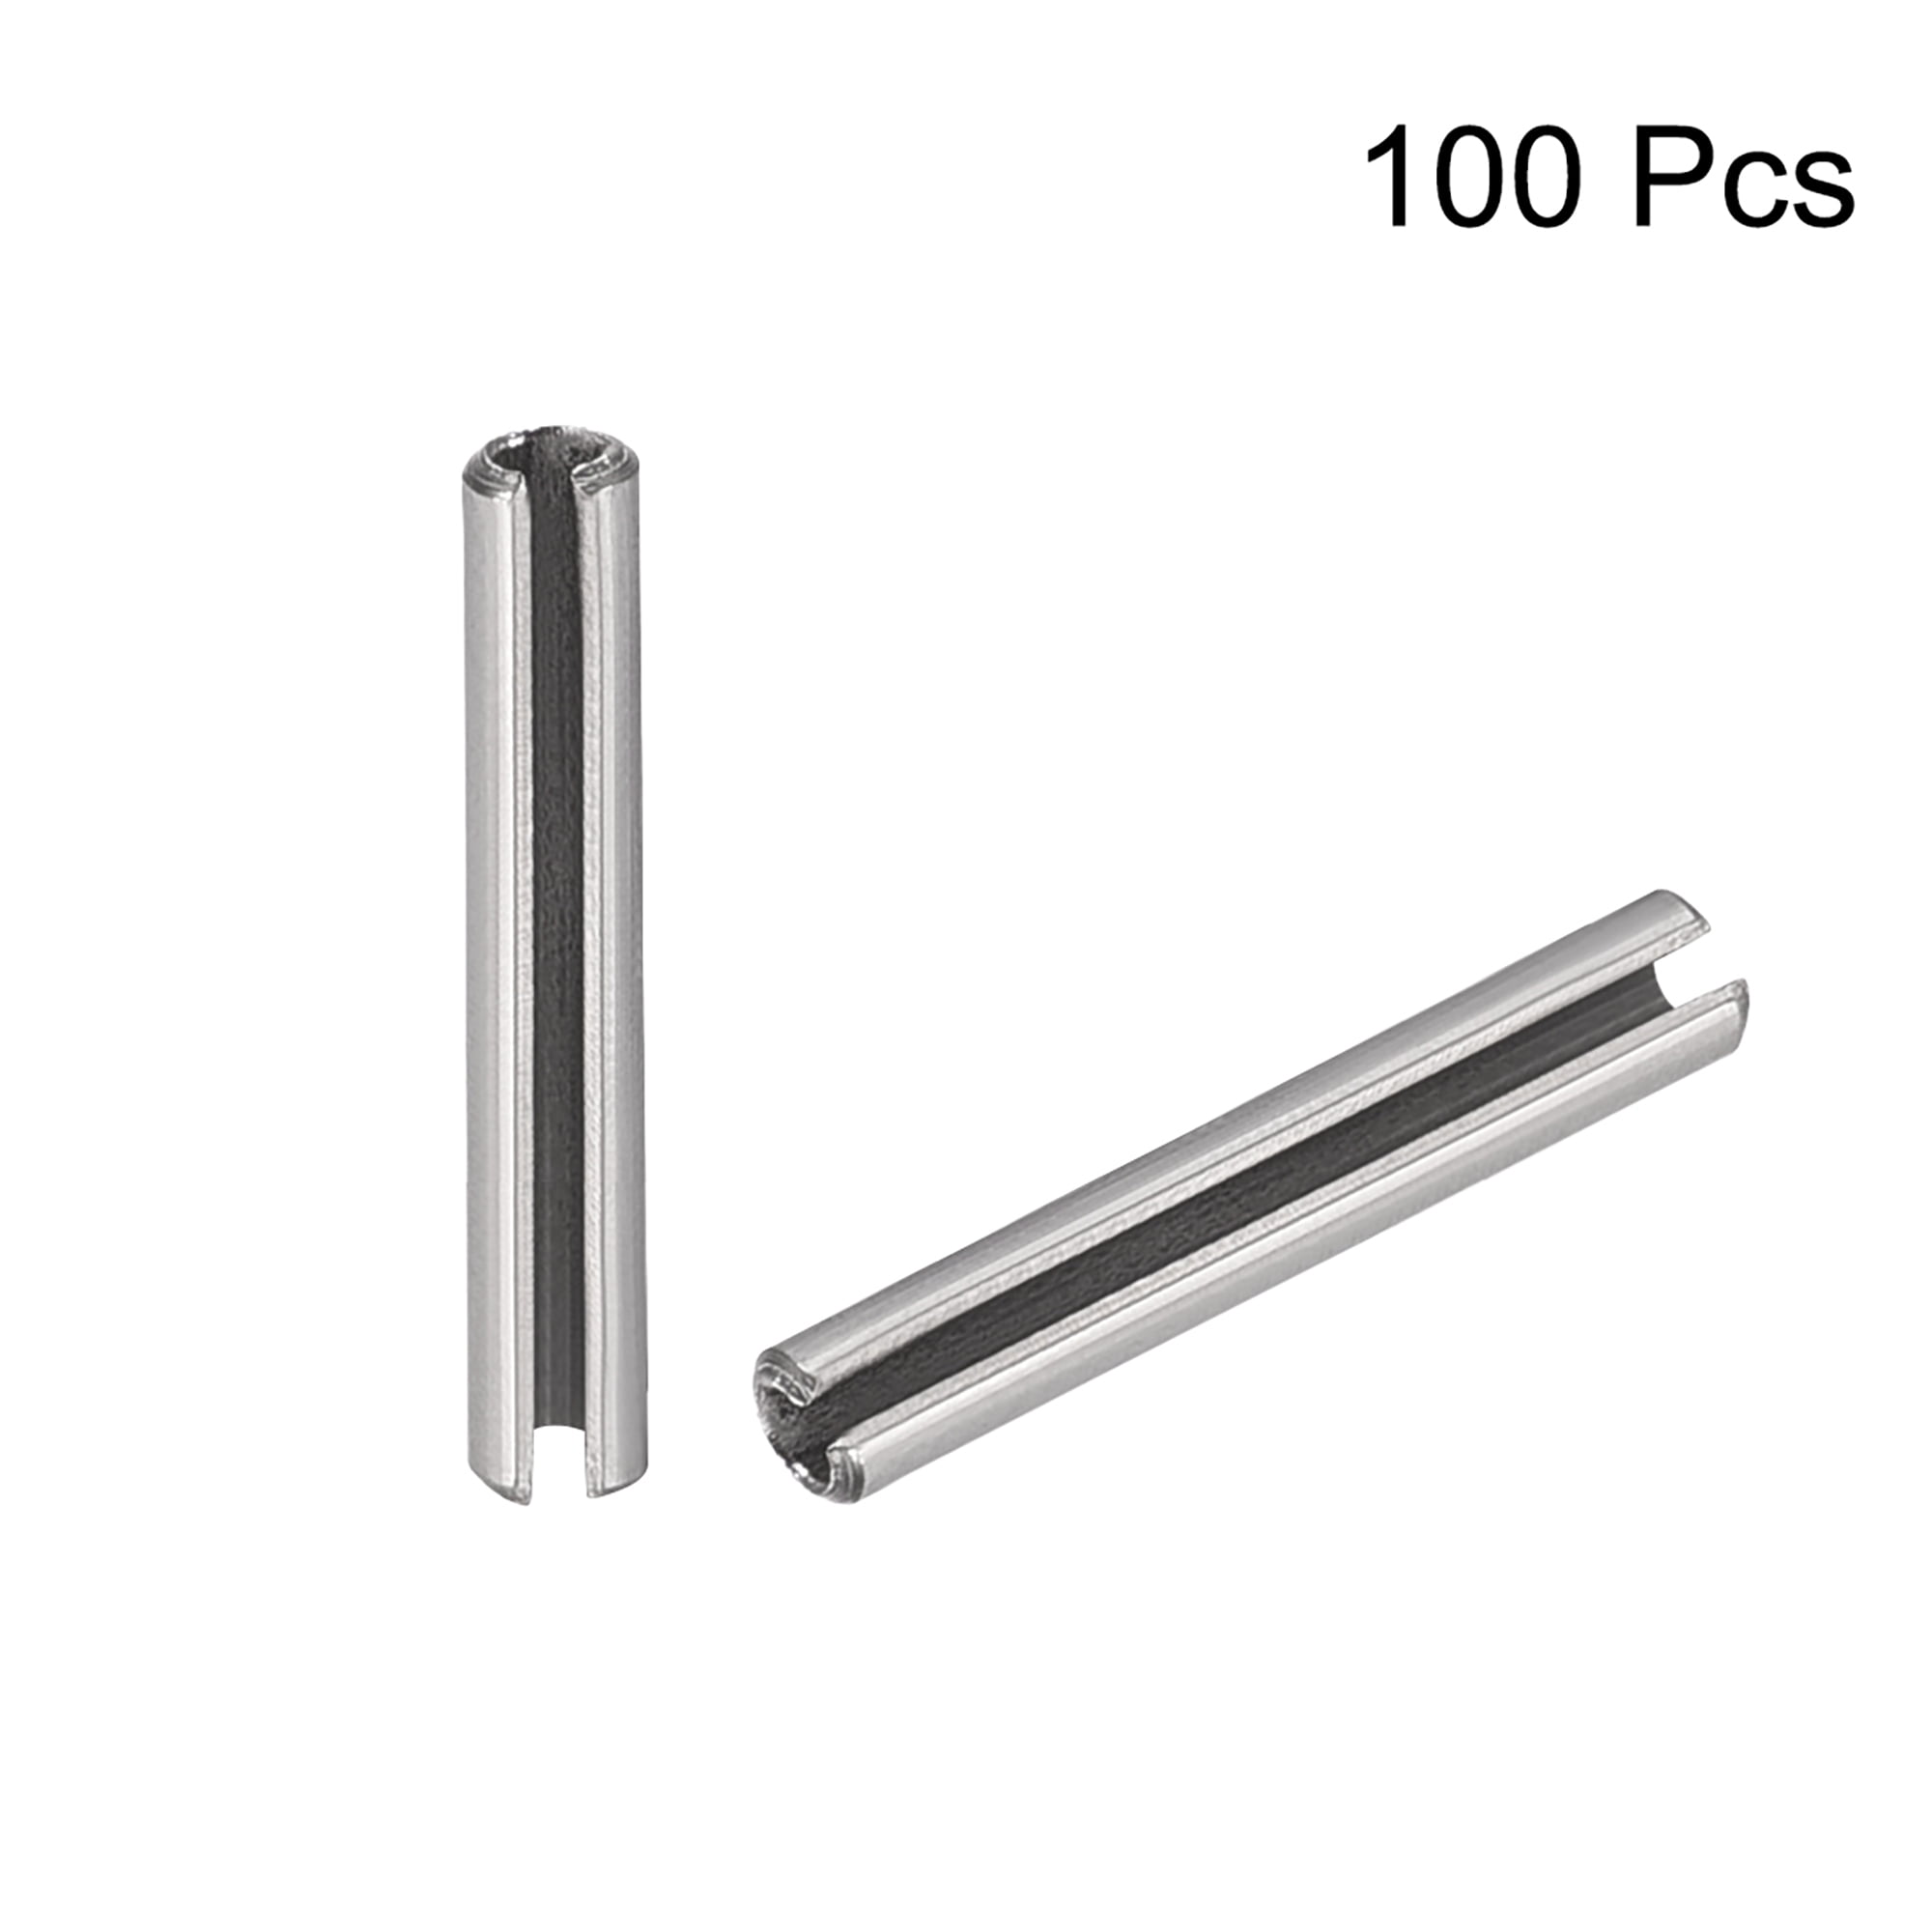 Approx 100 pcs 3/8" x 2-1/2" long Roll Pin Steel Split Spring Tension Fasteners 